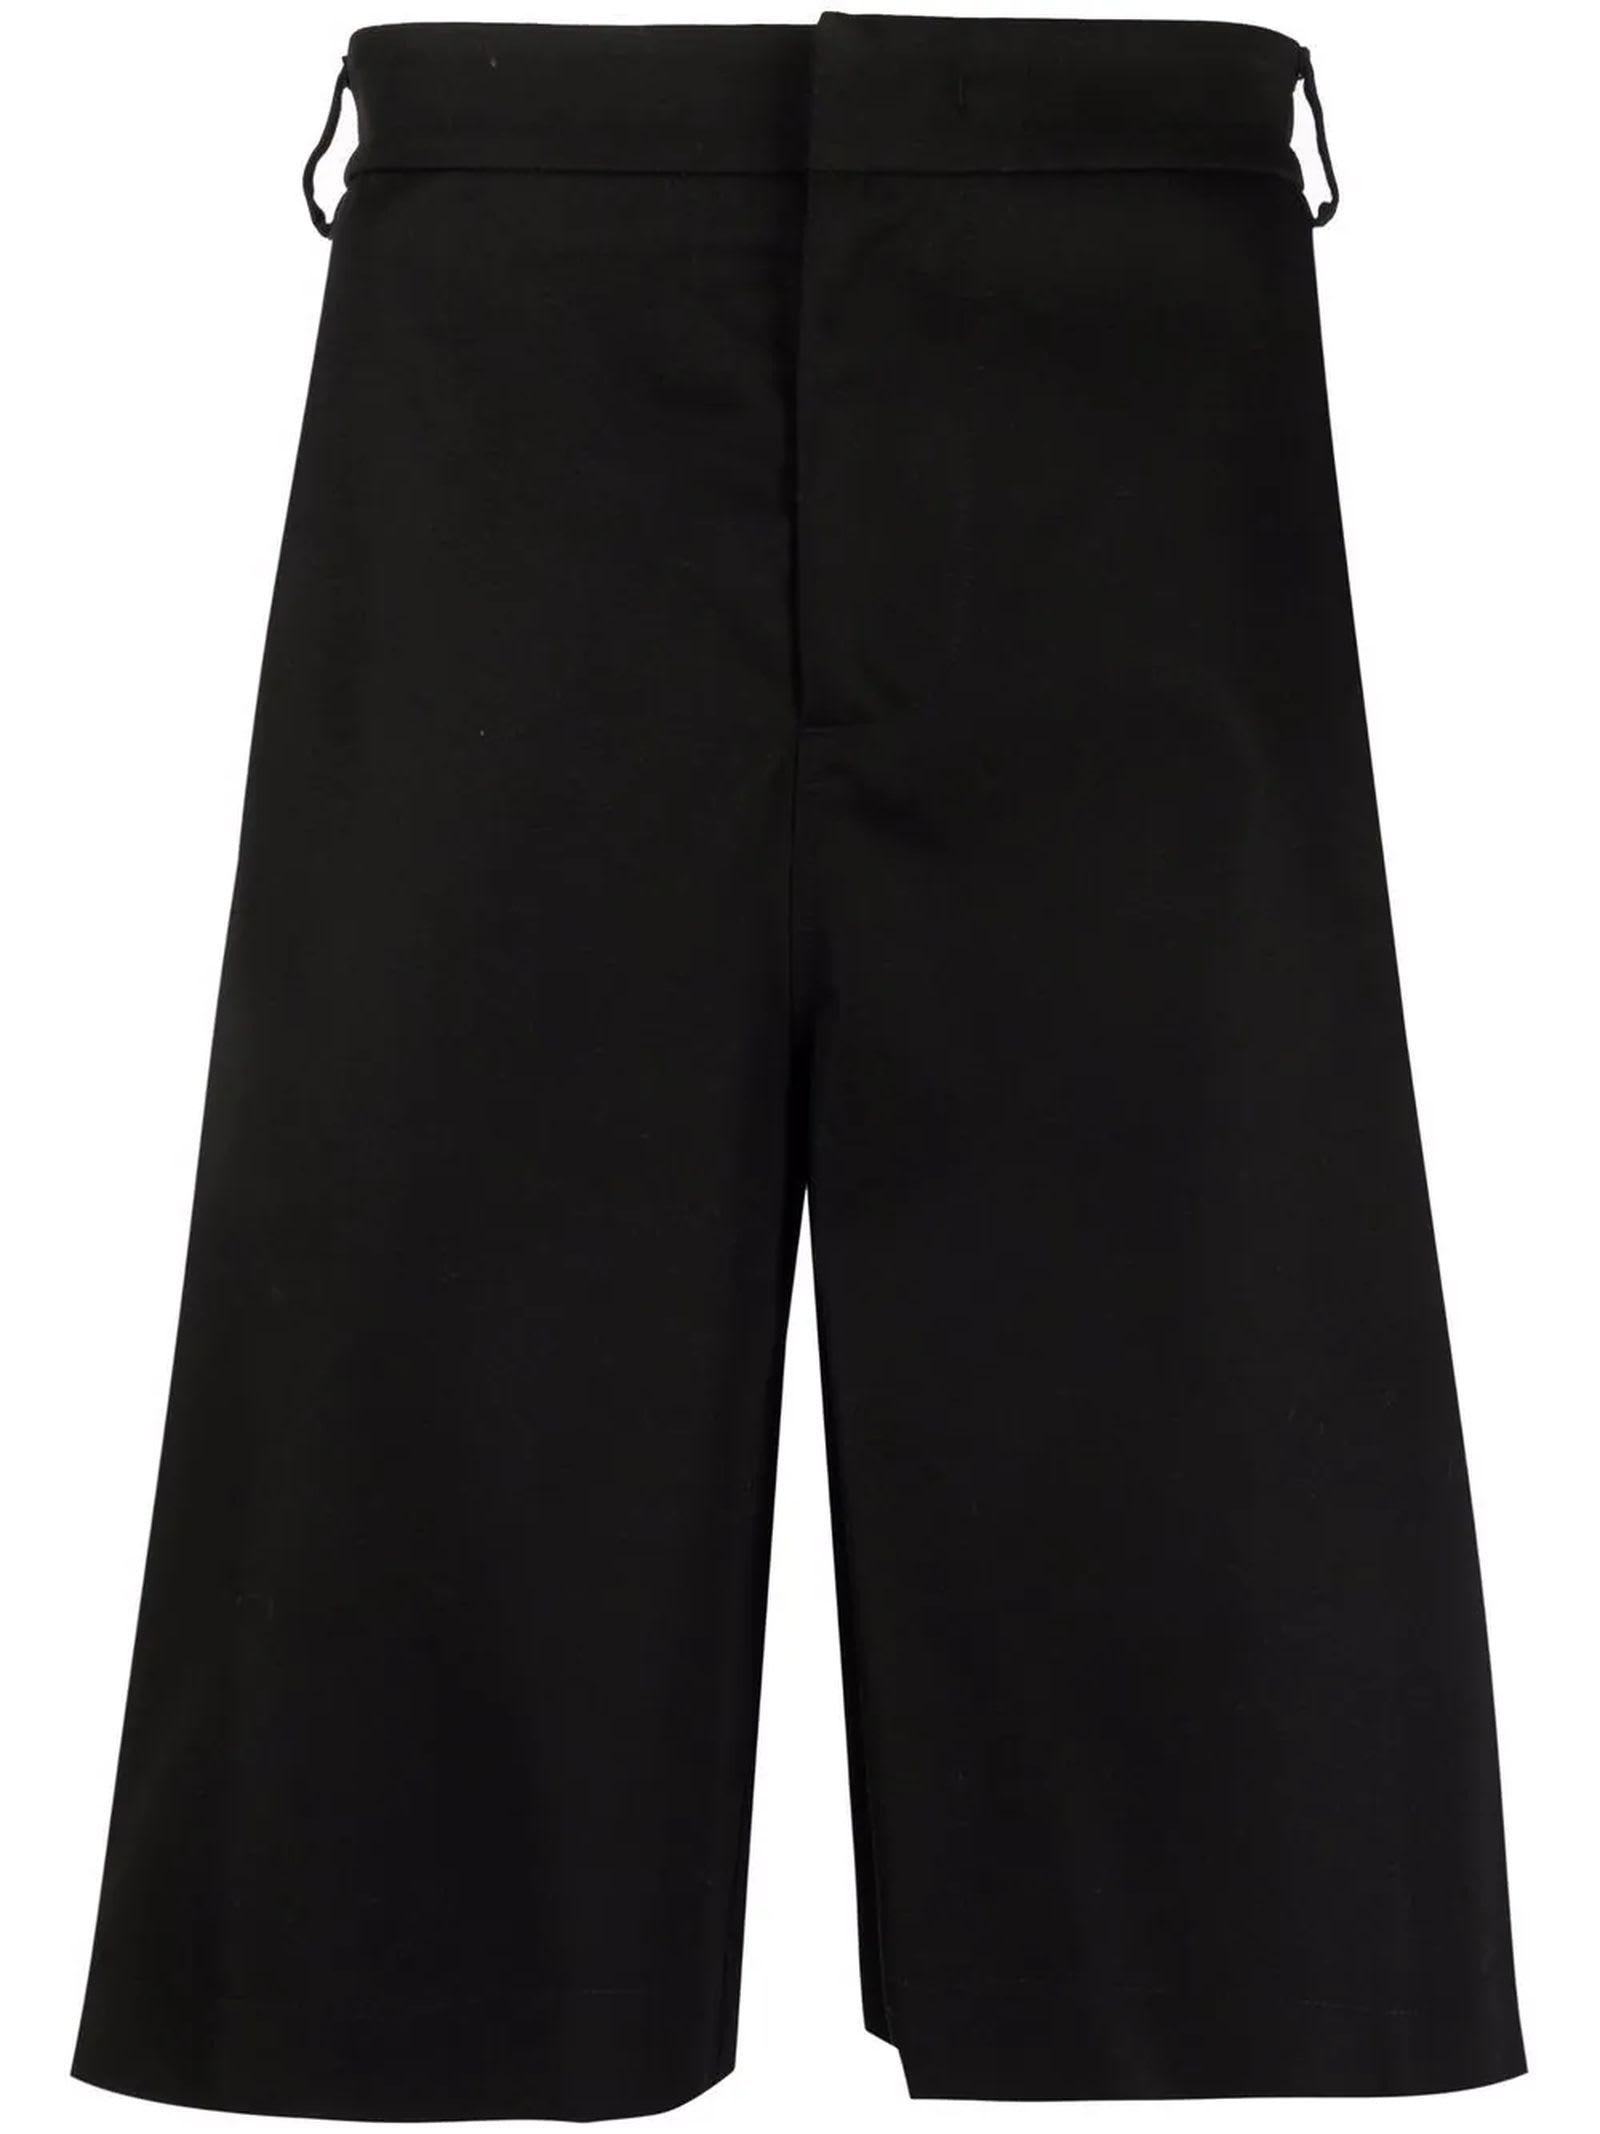 FourTwoFour on Fairfax Jet-black Cotton Shorts